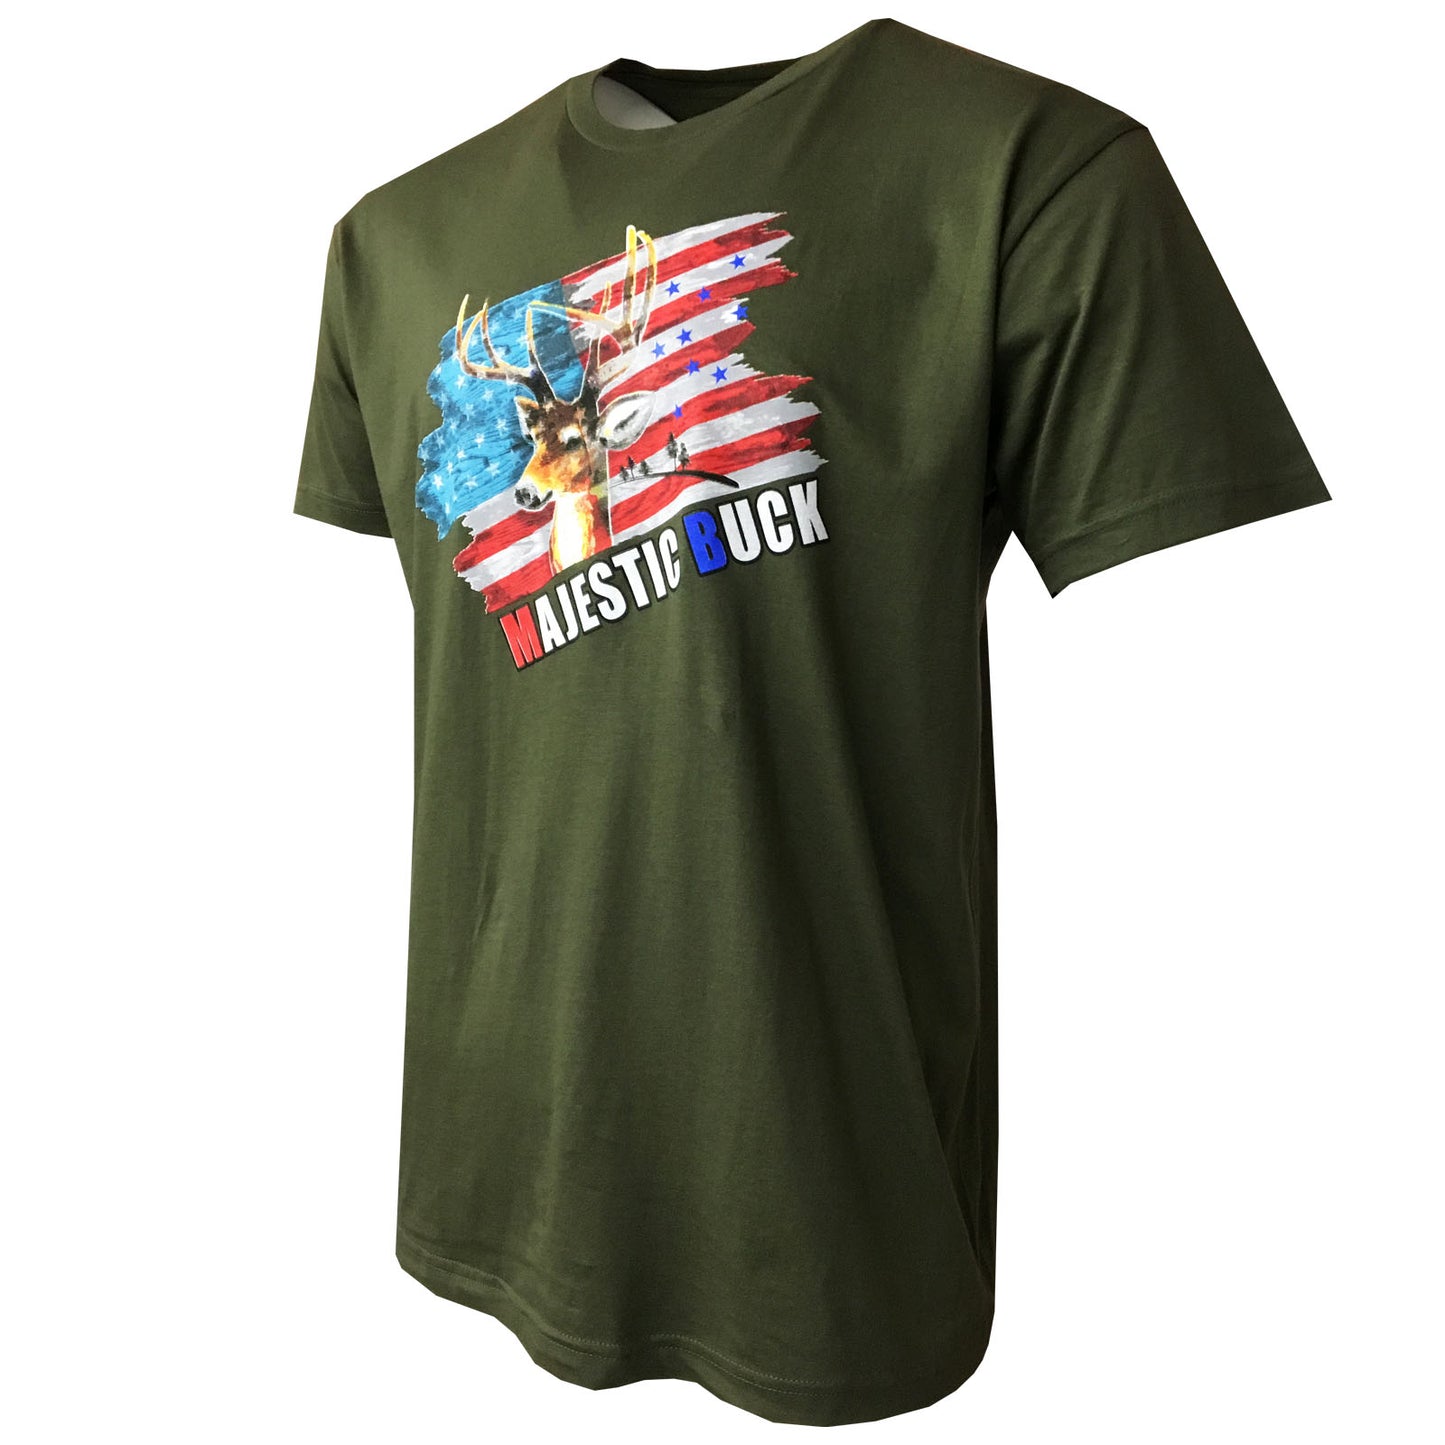 Men's T-Shirts -U S FLAG -HUNTING MAJESTIC BUCK - 100% Cotton SOFT FABRIC- Green & Red